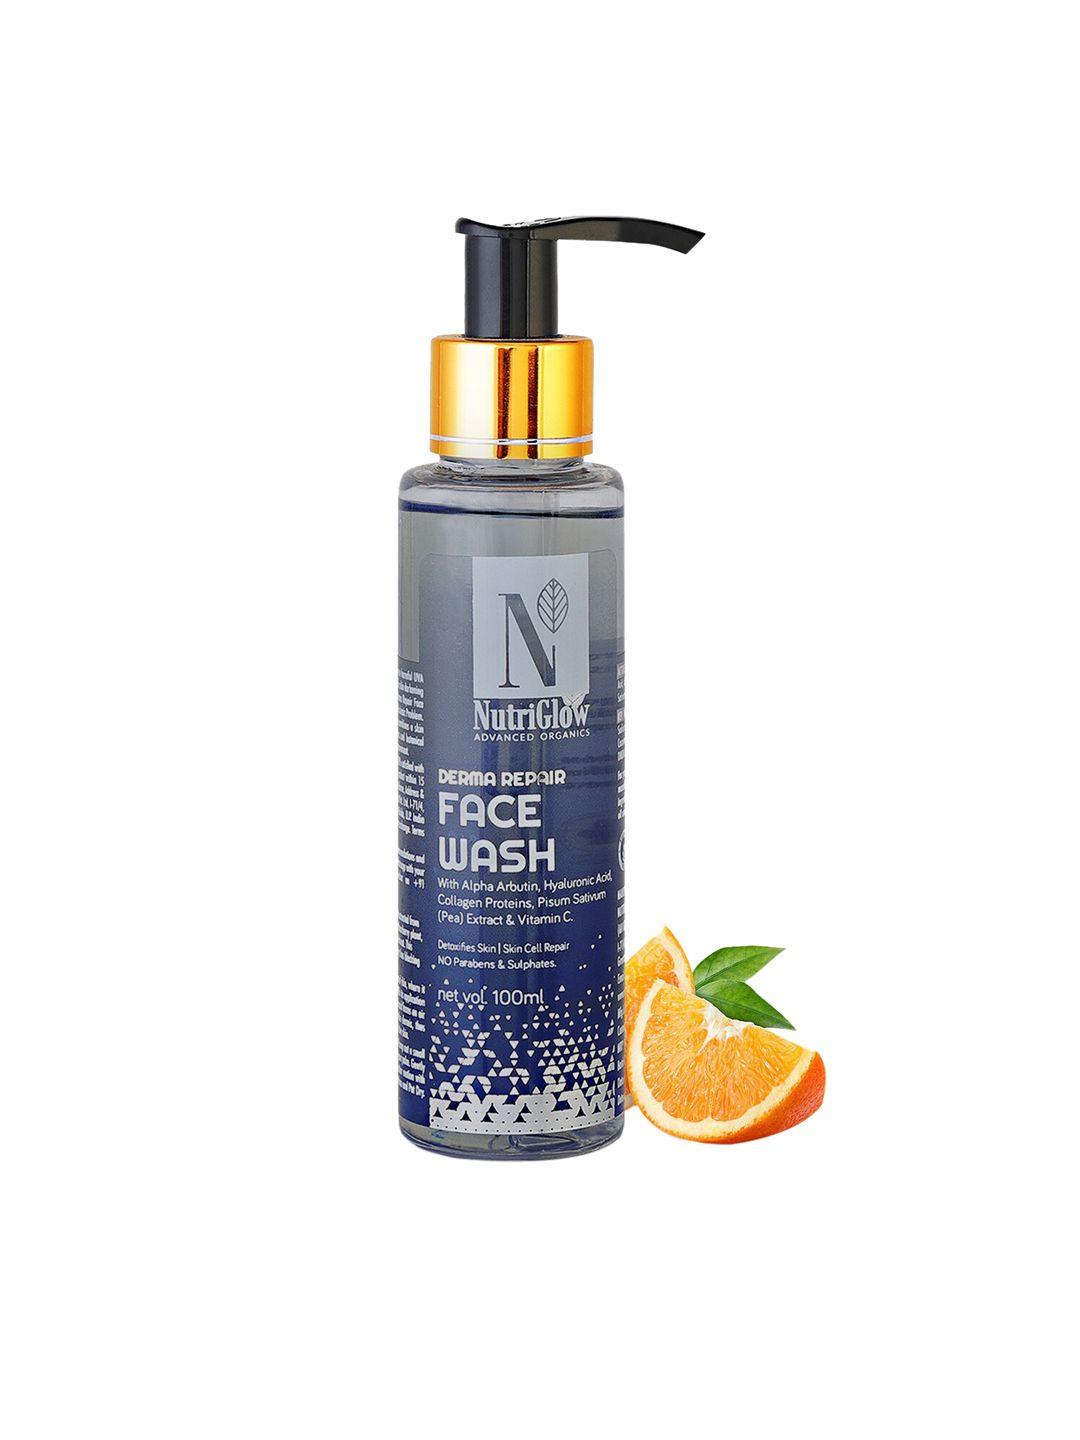 nutriglow advanced organics derma repair sustainable face wash 100 ml